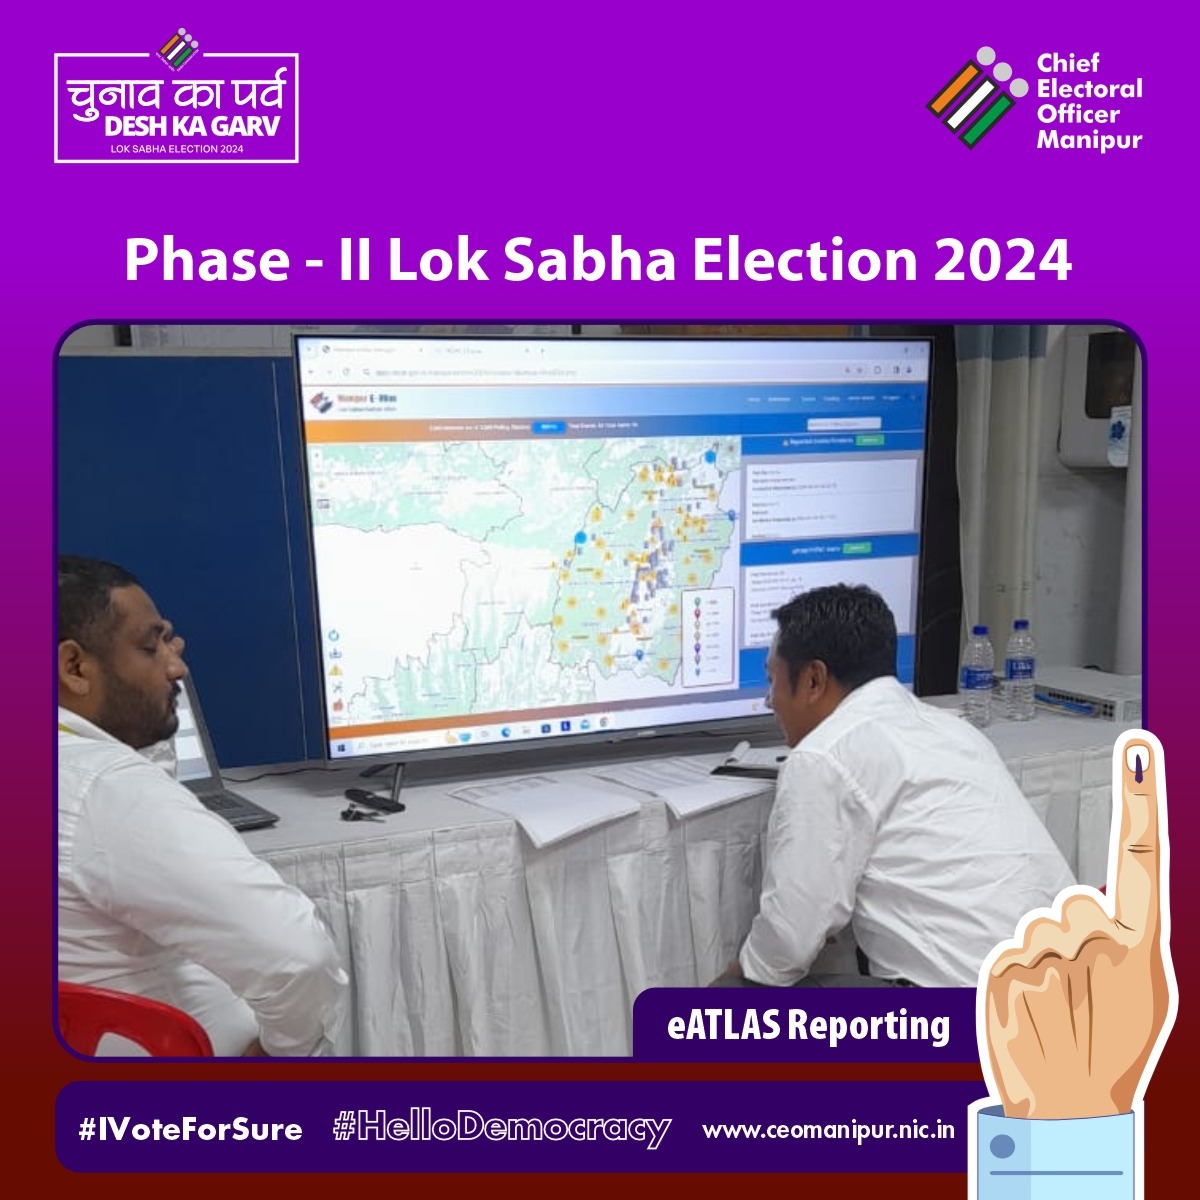 Resolving EVM/VVPAT issues via eATLAS from Control Rooms at #CEOManipur's & DEO's Offices. 

#ChunavKaParv #DeshKaGarv #IVote4Sure #HelloDemocracy #LokSabhaElections2024 #ECI #VotingRights